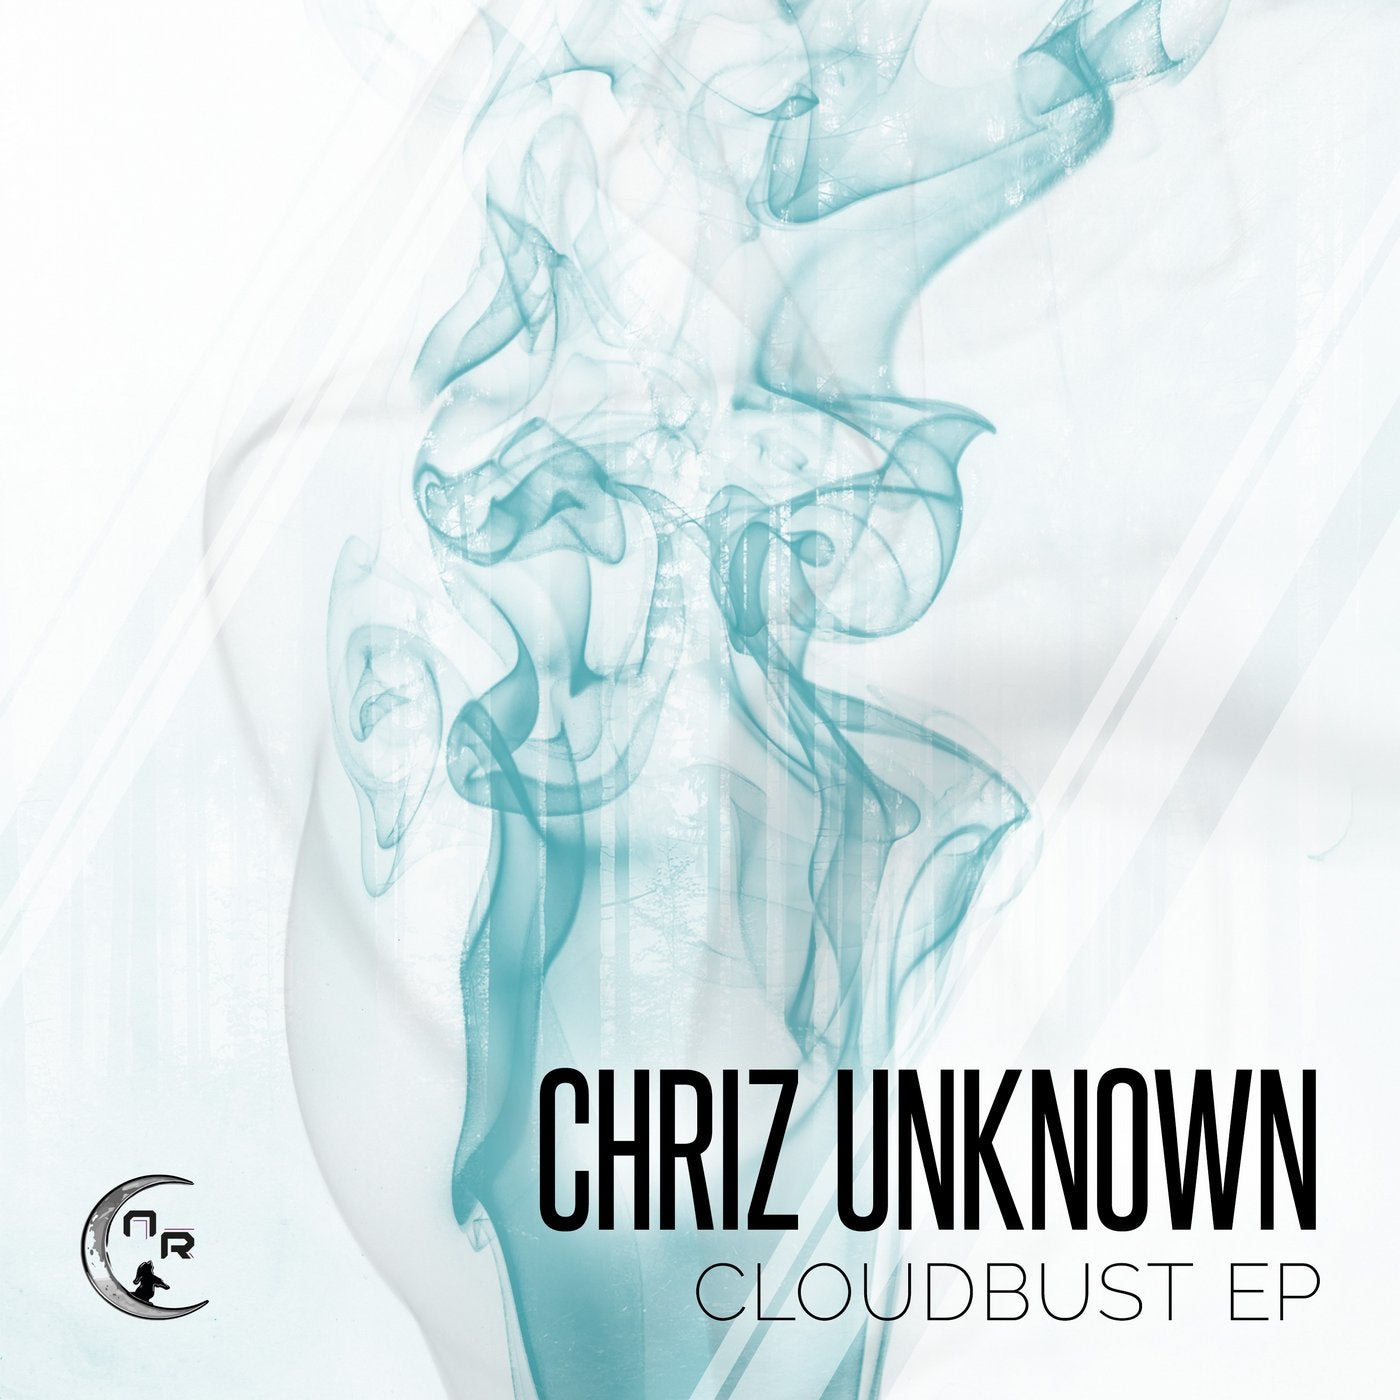 Cloudbust EP